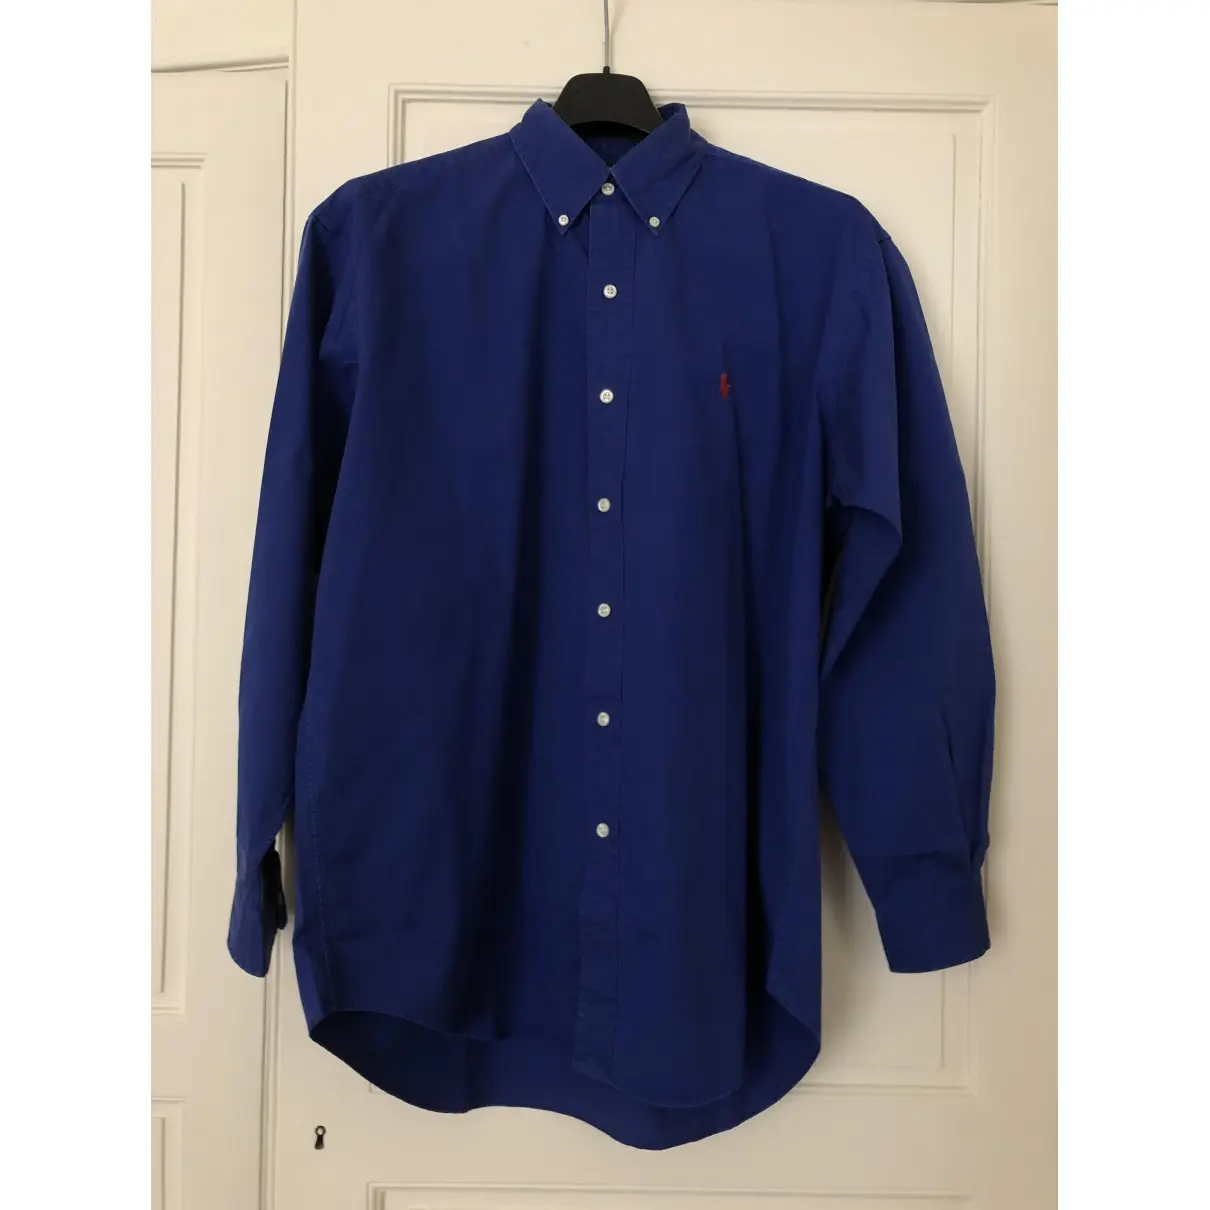 Polo Ralph Lauren Shirt for sale